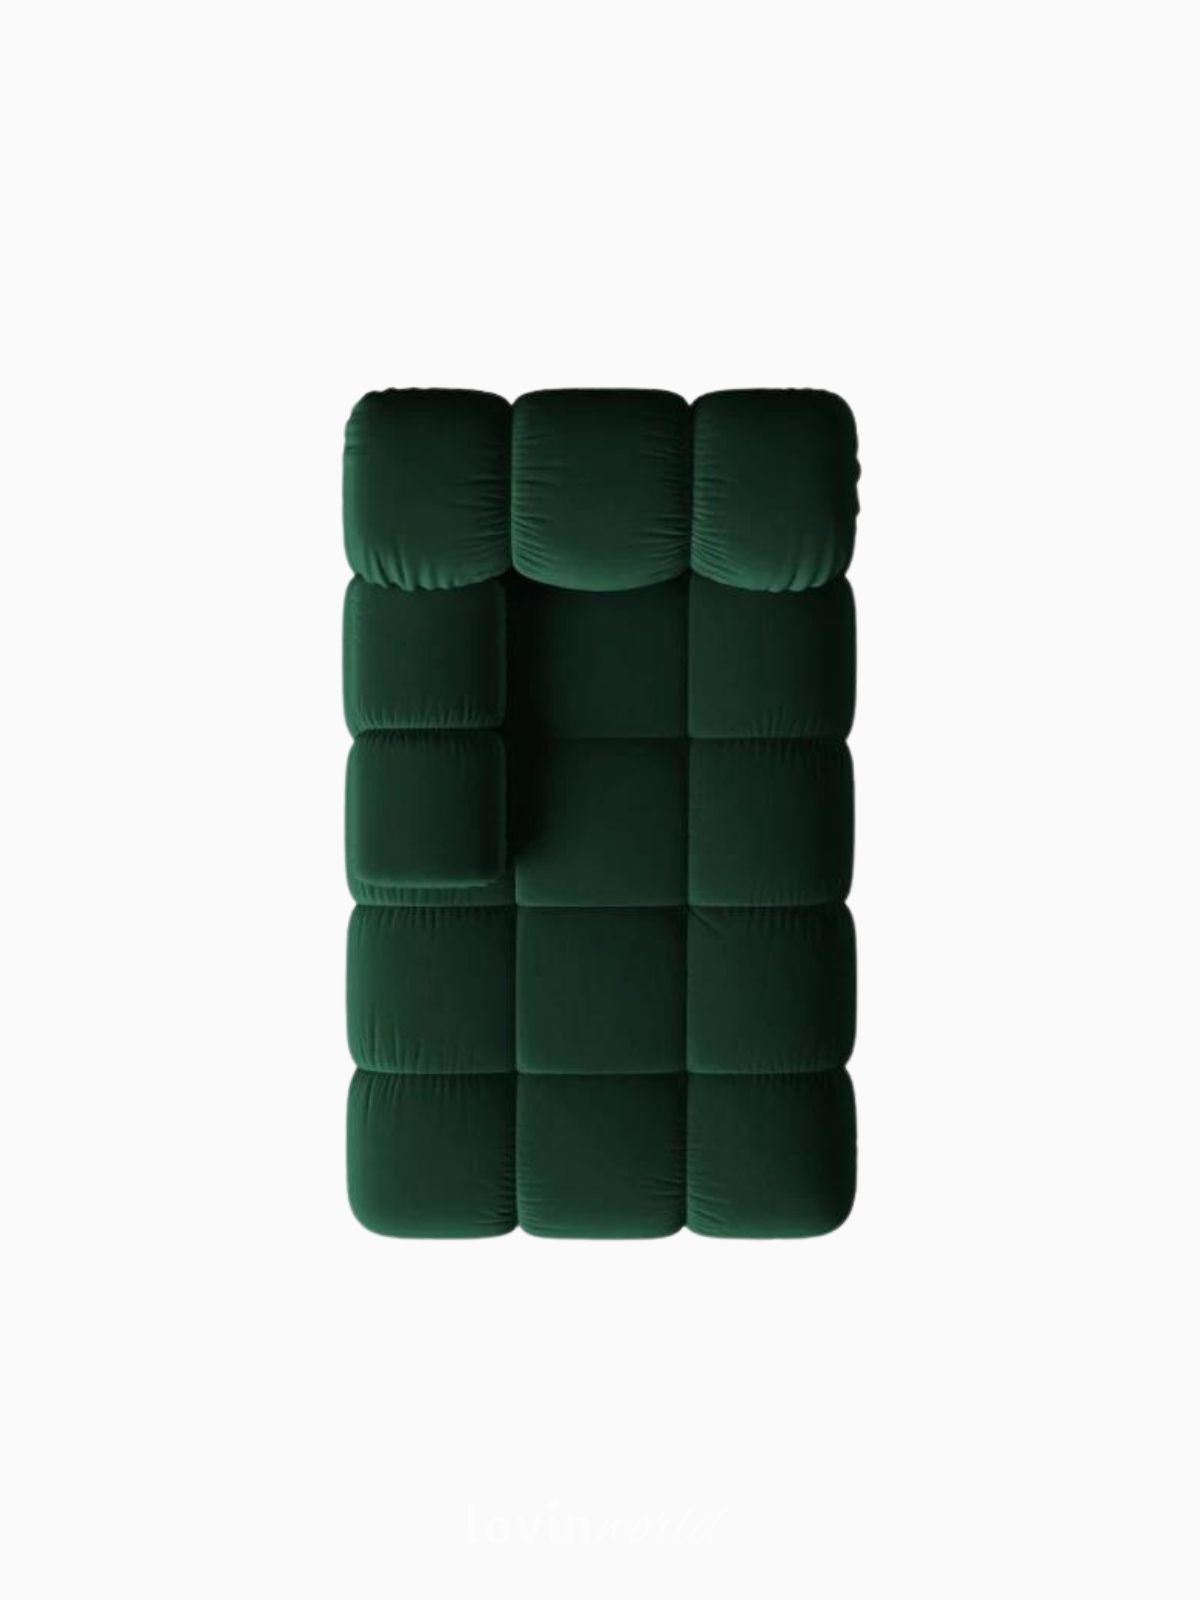 Divano modulare sinistro Bellis in velluto, colore verde-4